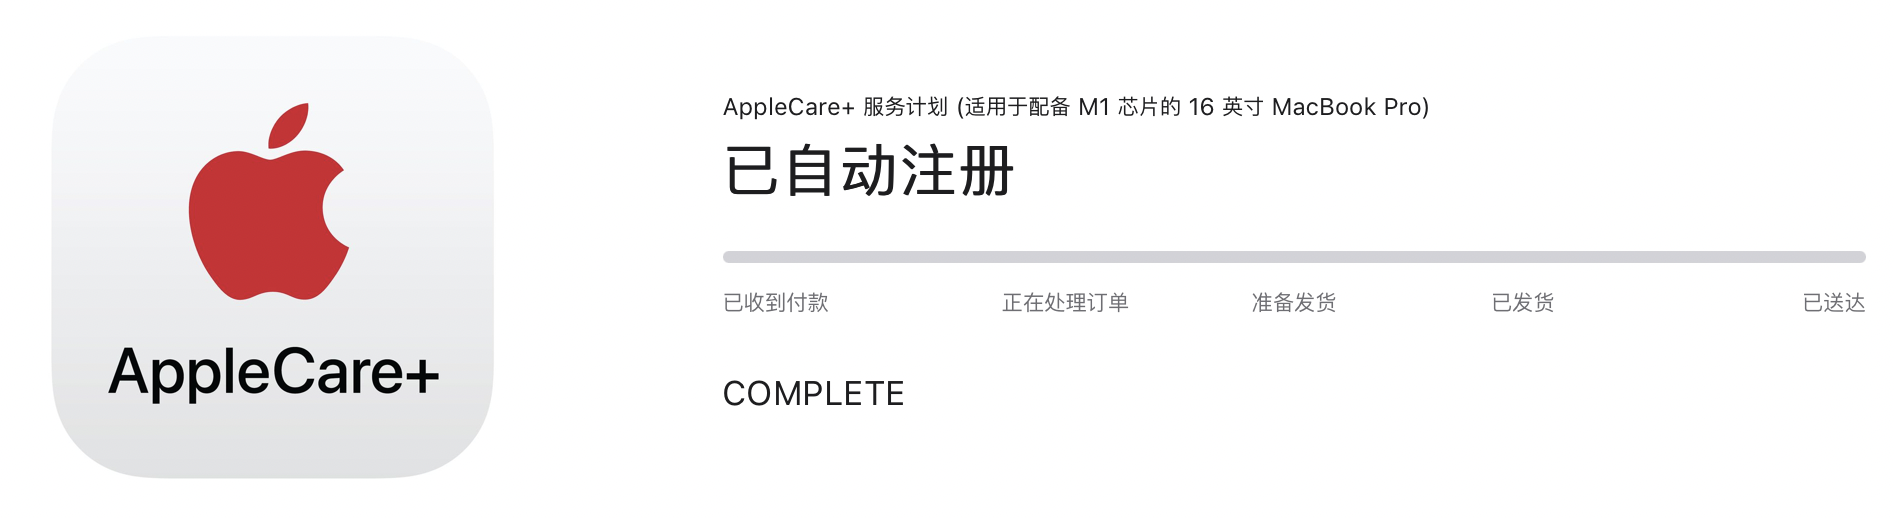 AppleCare付☆MacBook Air 2020 Gray☆放充電回数16 - ノートPC